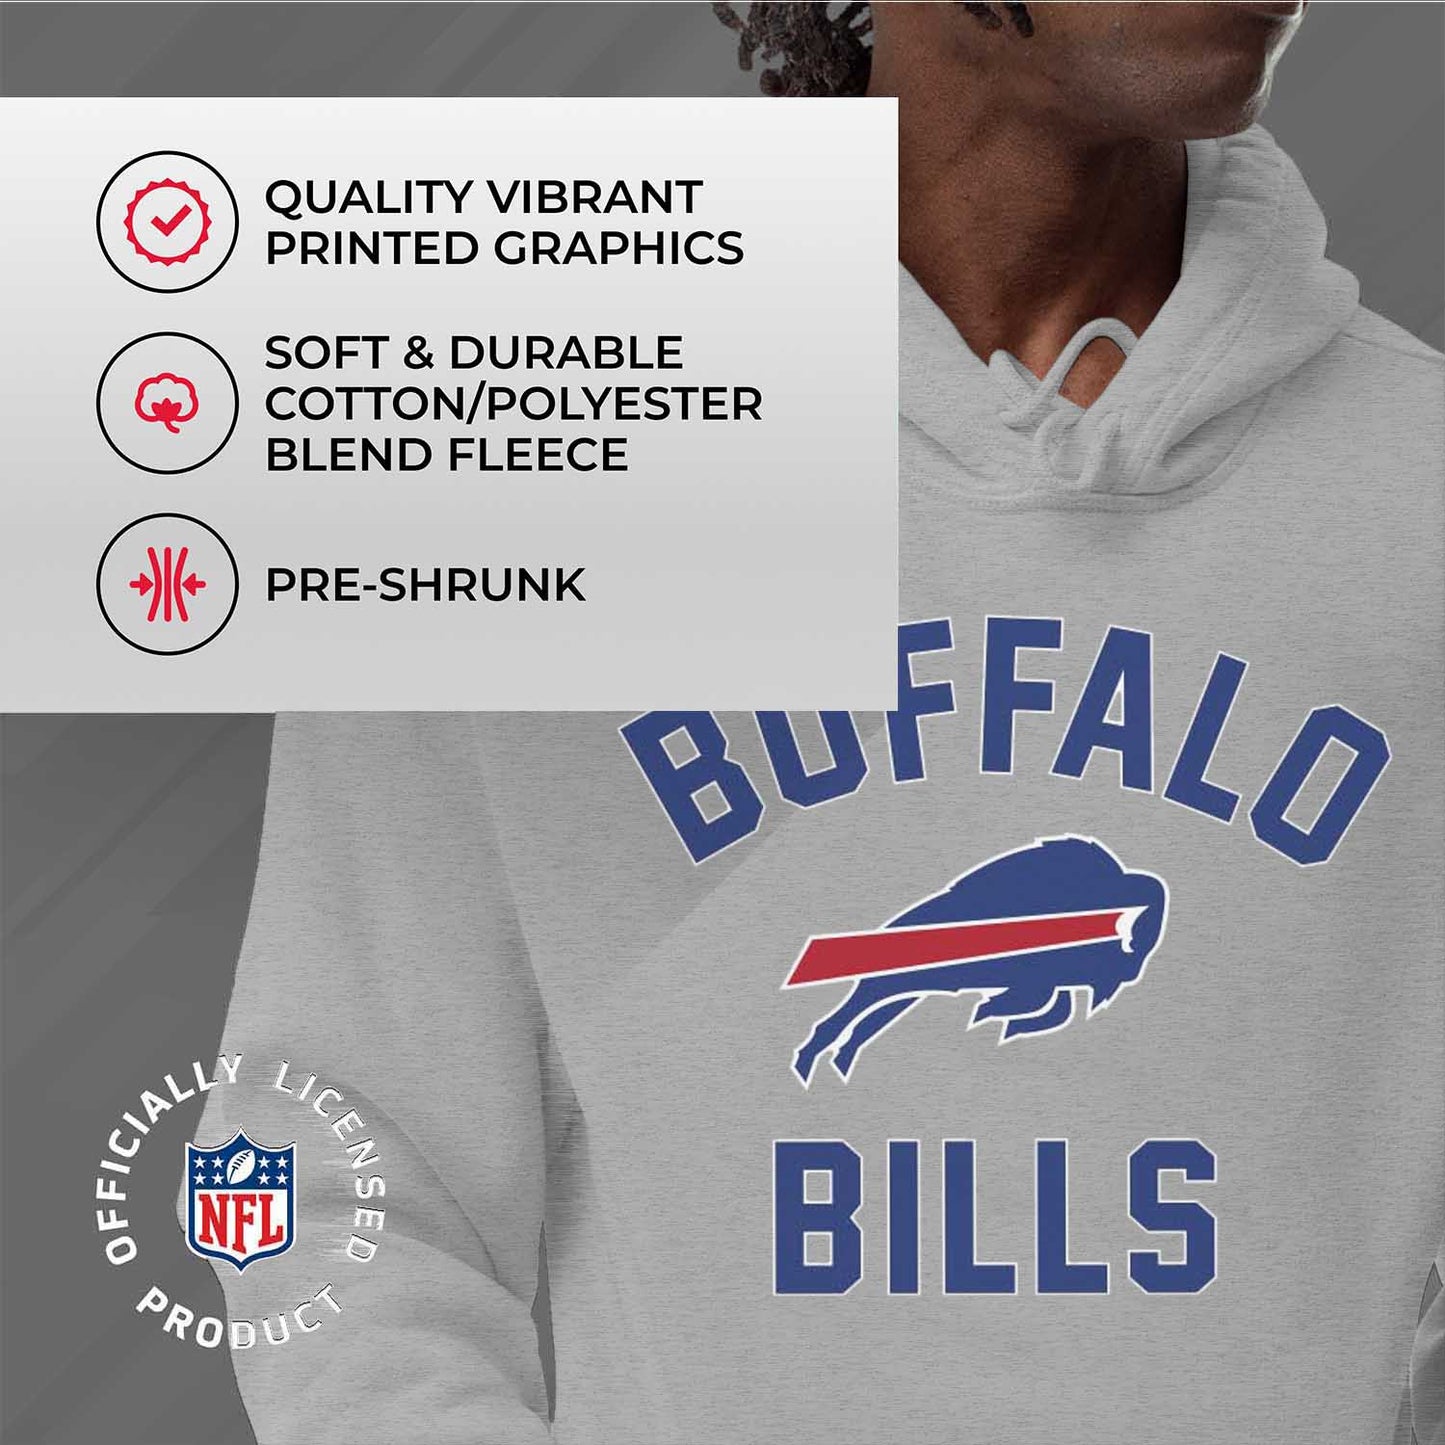 Buffalo Bills NFL Adult Gameday Hooded Sweatshirt - Sport Gray